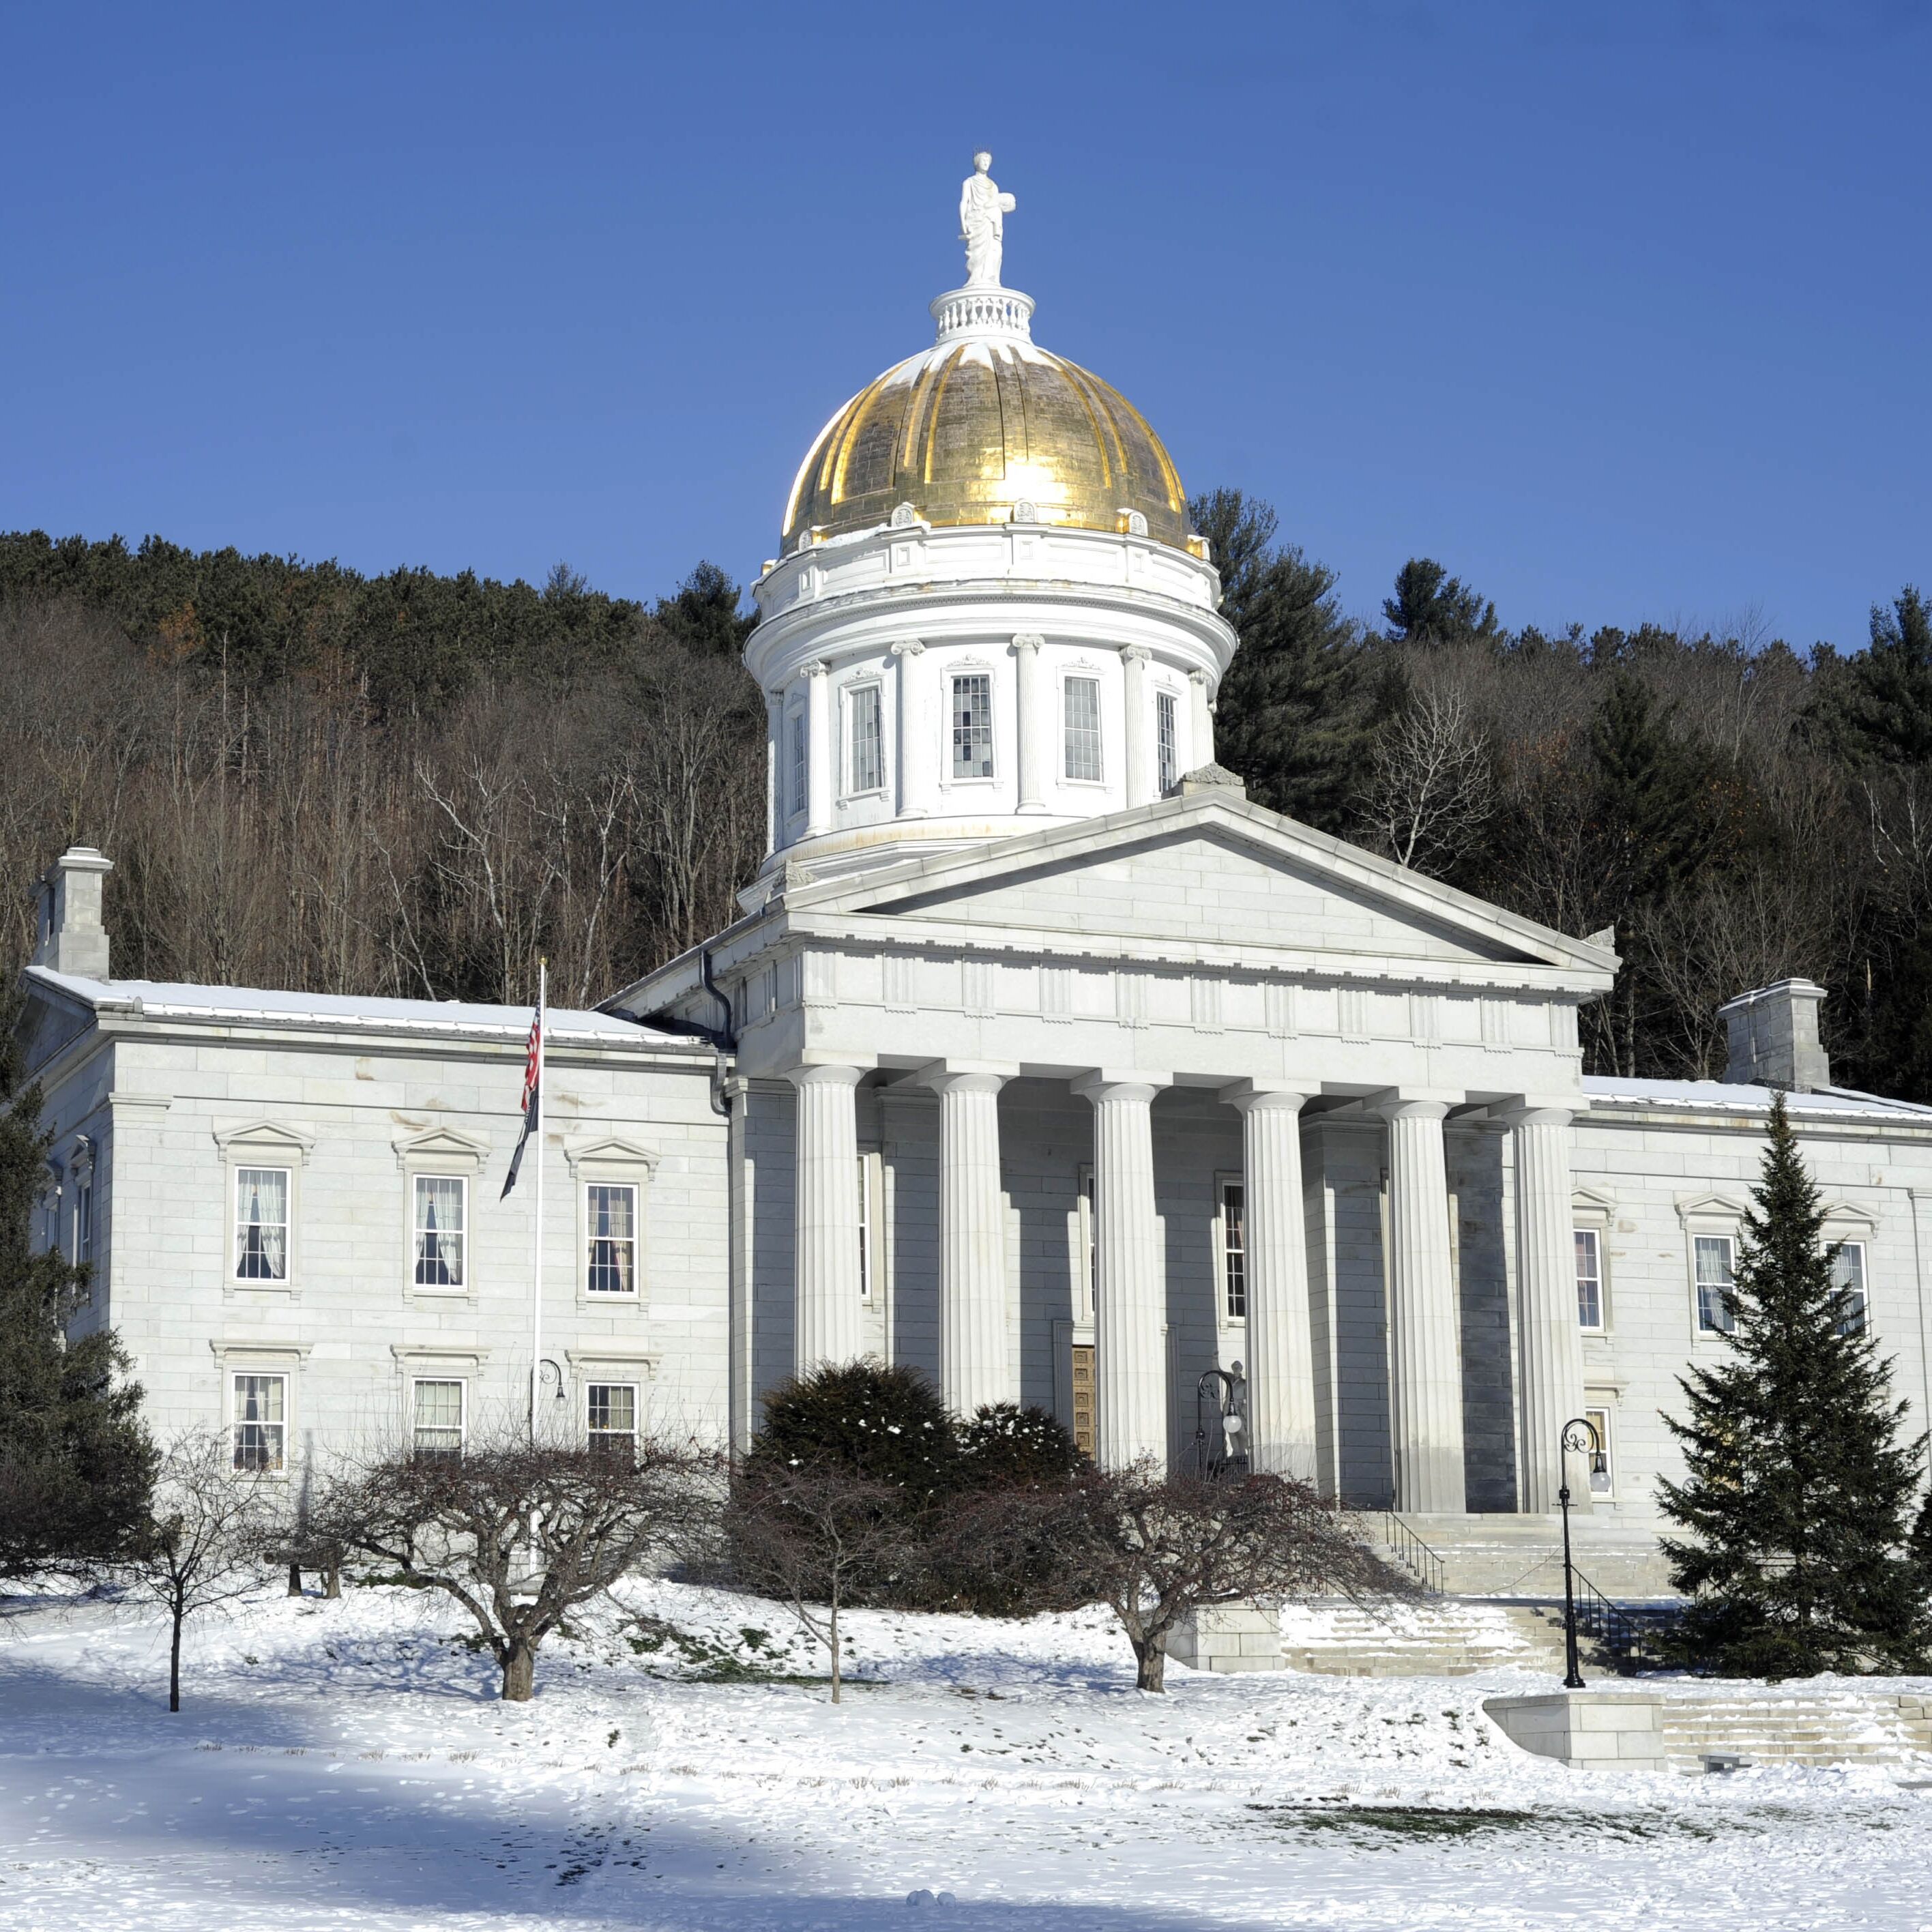 Vermont Historical Society